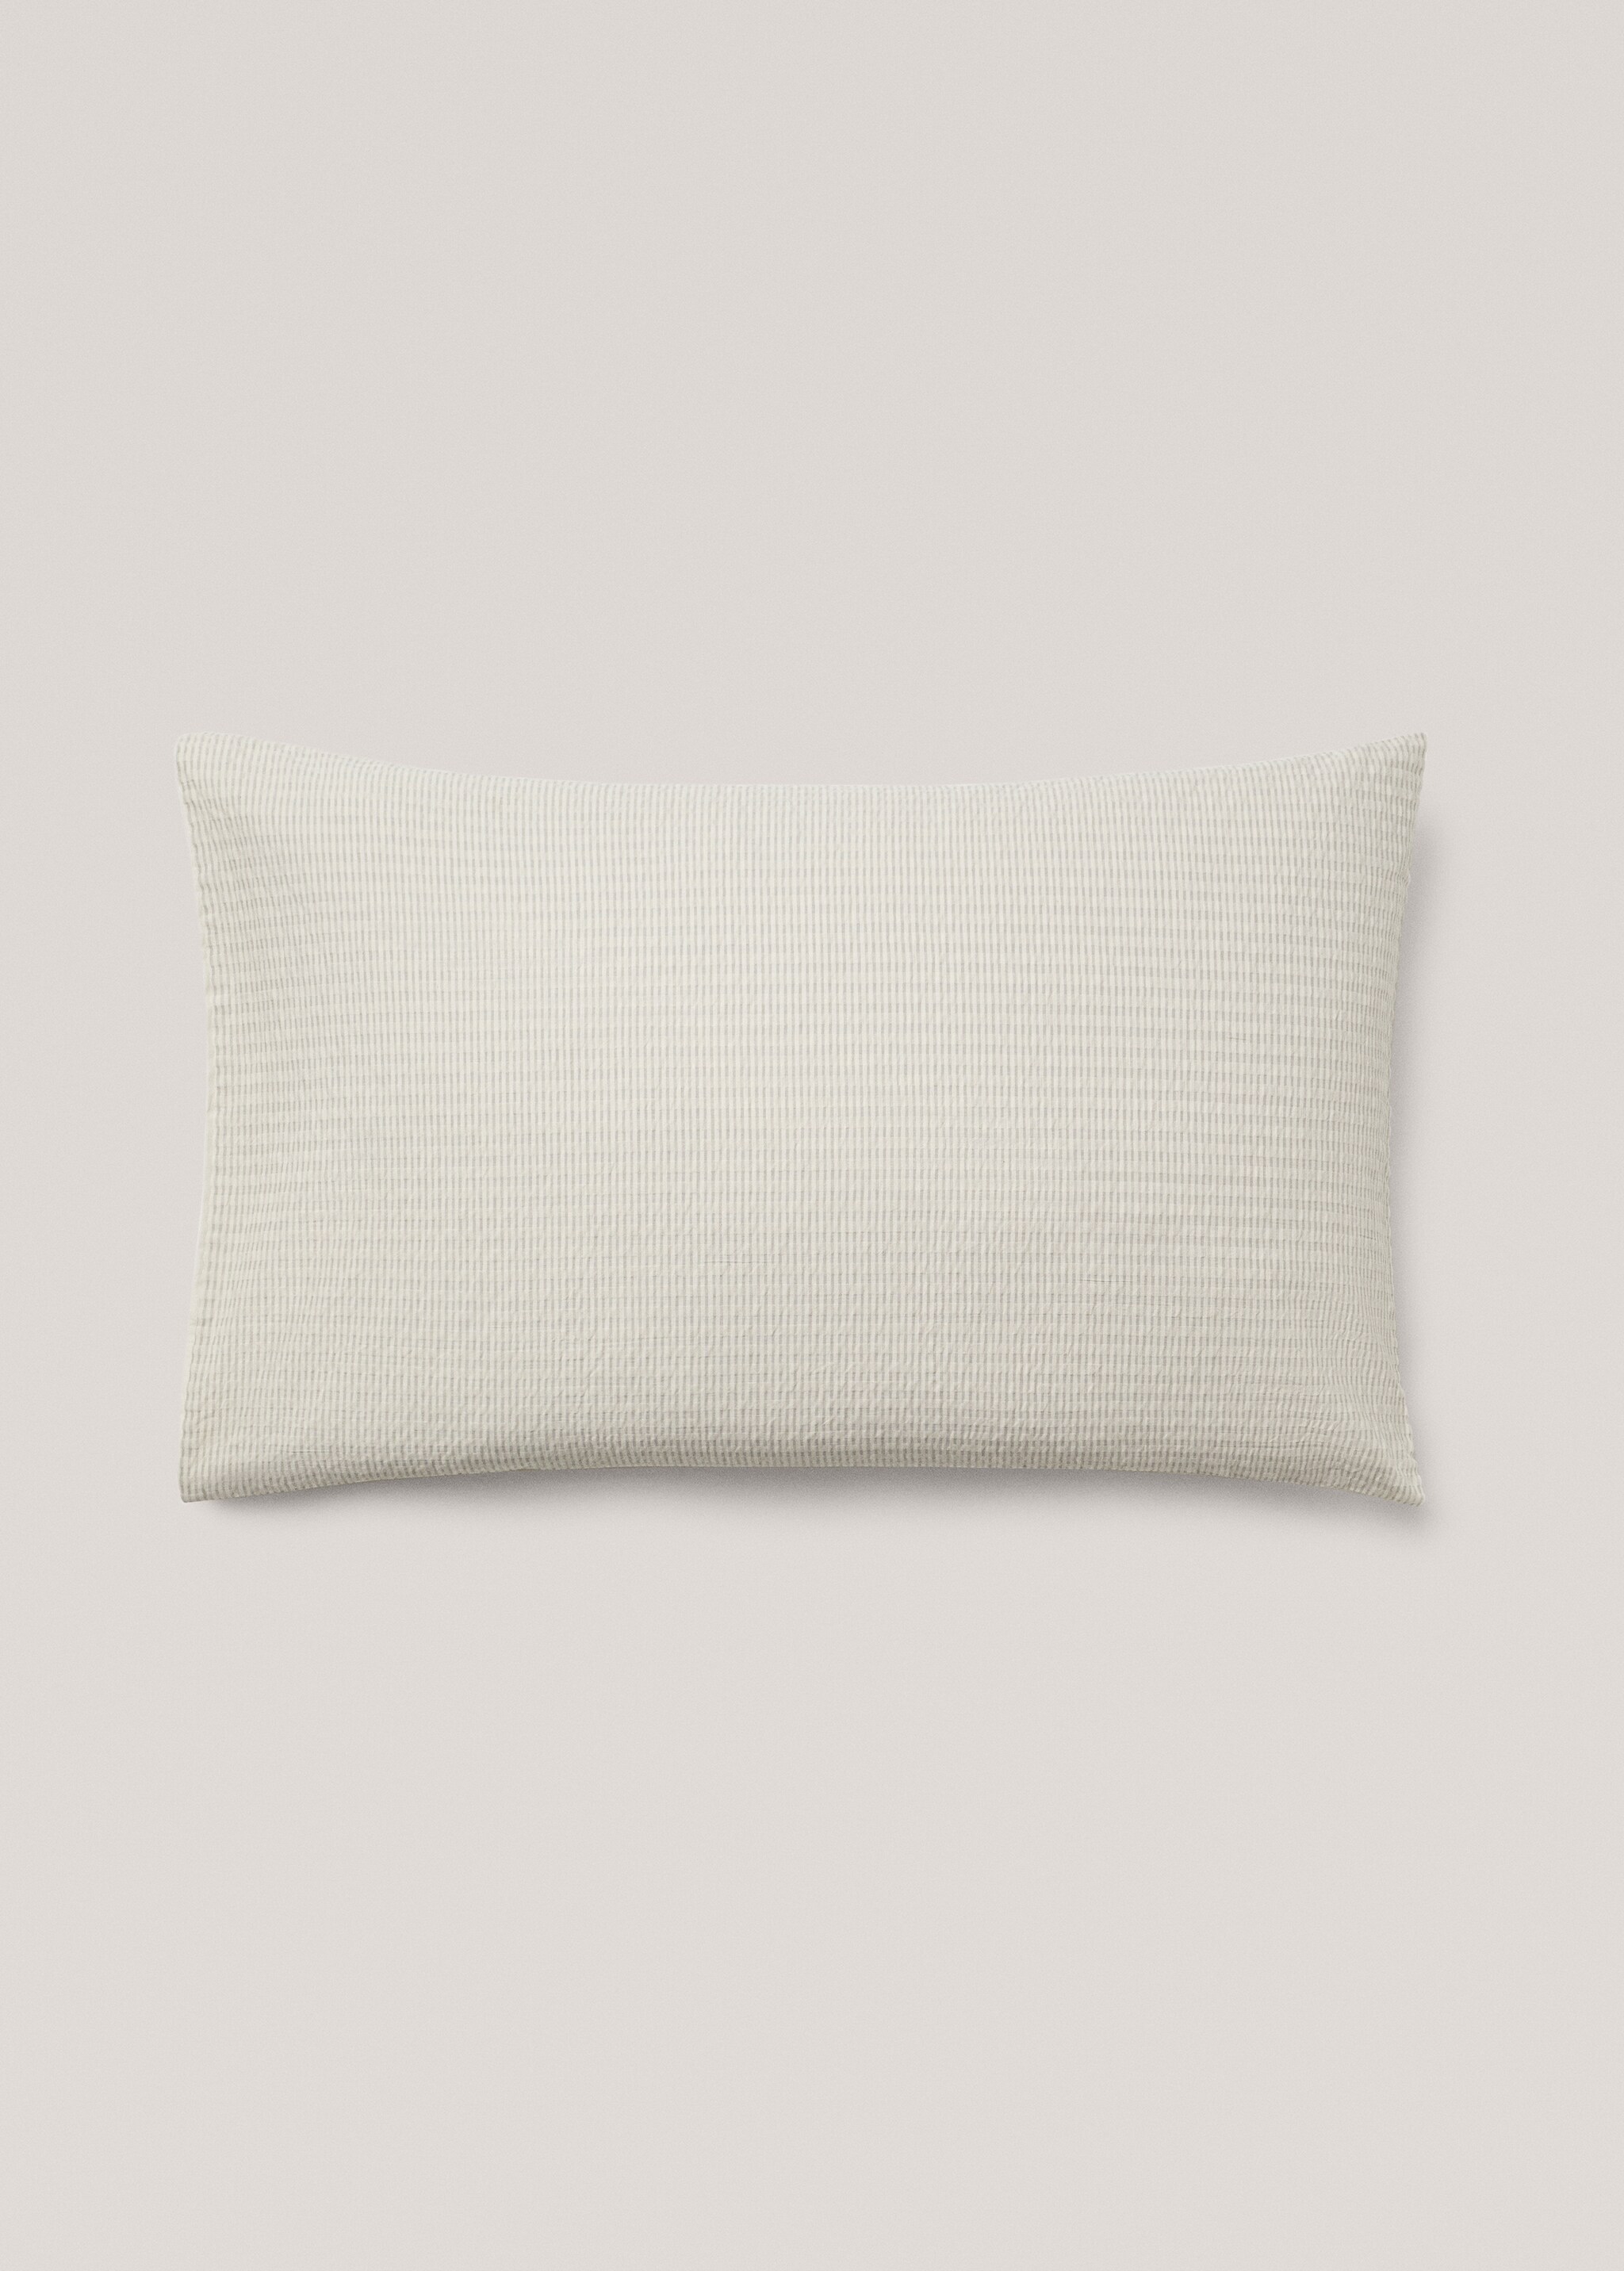 Woven stripe seersucker pillowcase 50x75cm - Article without model